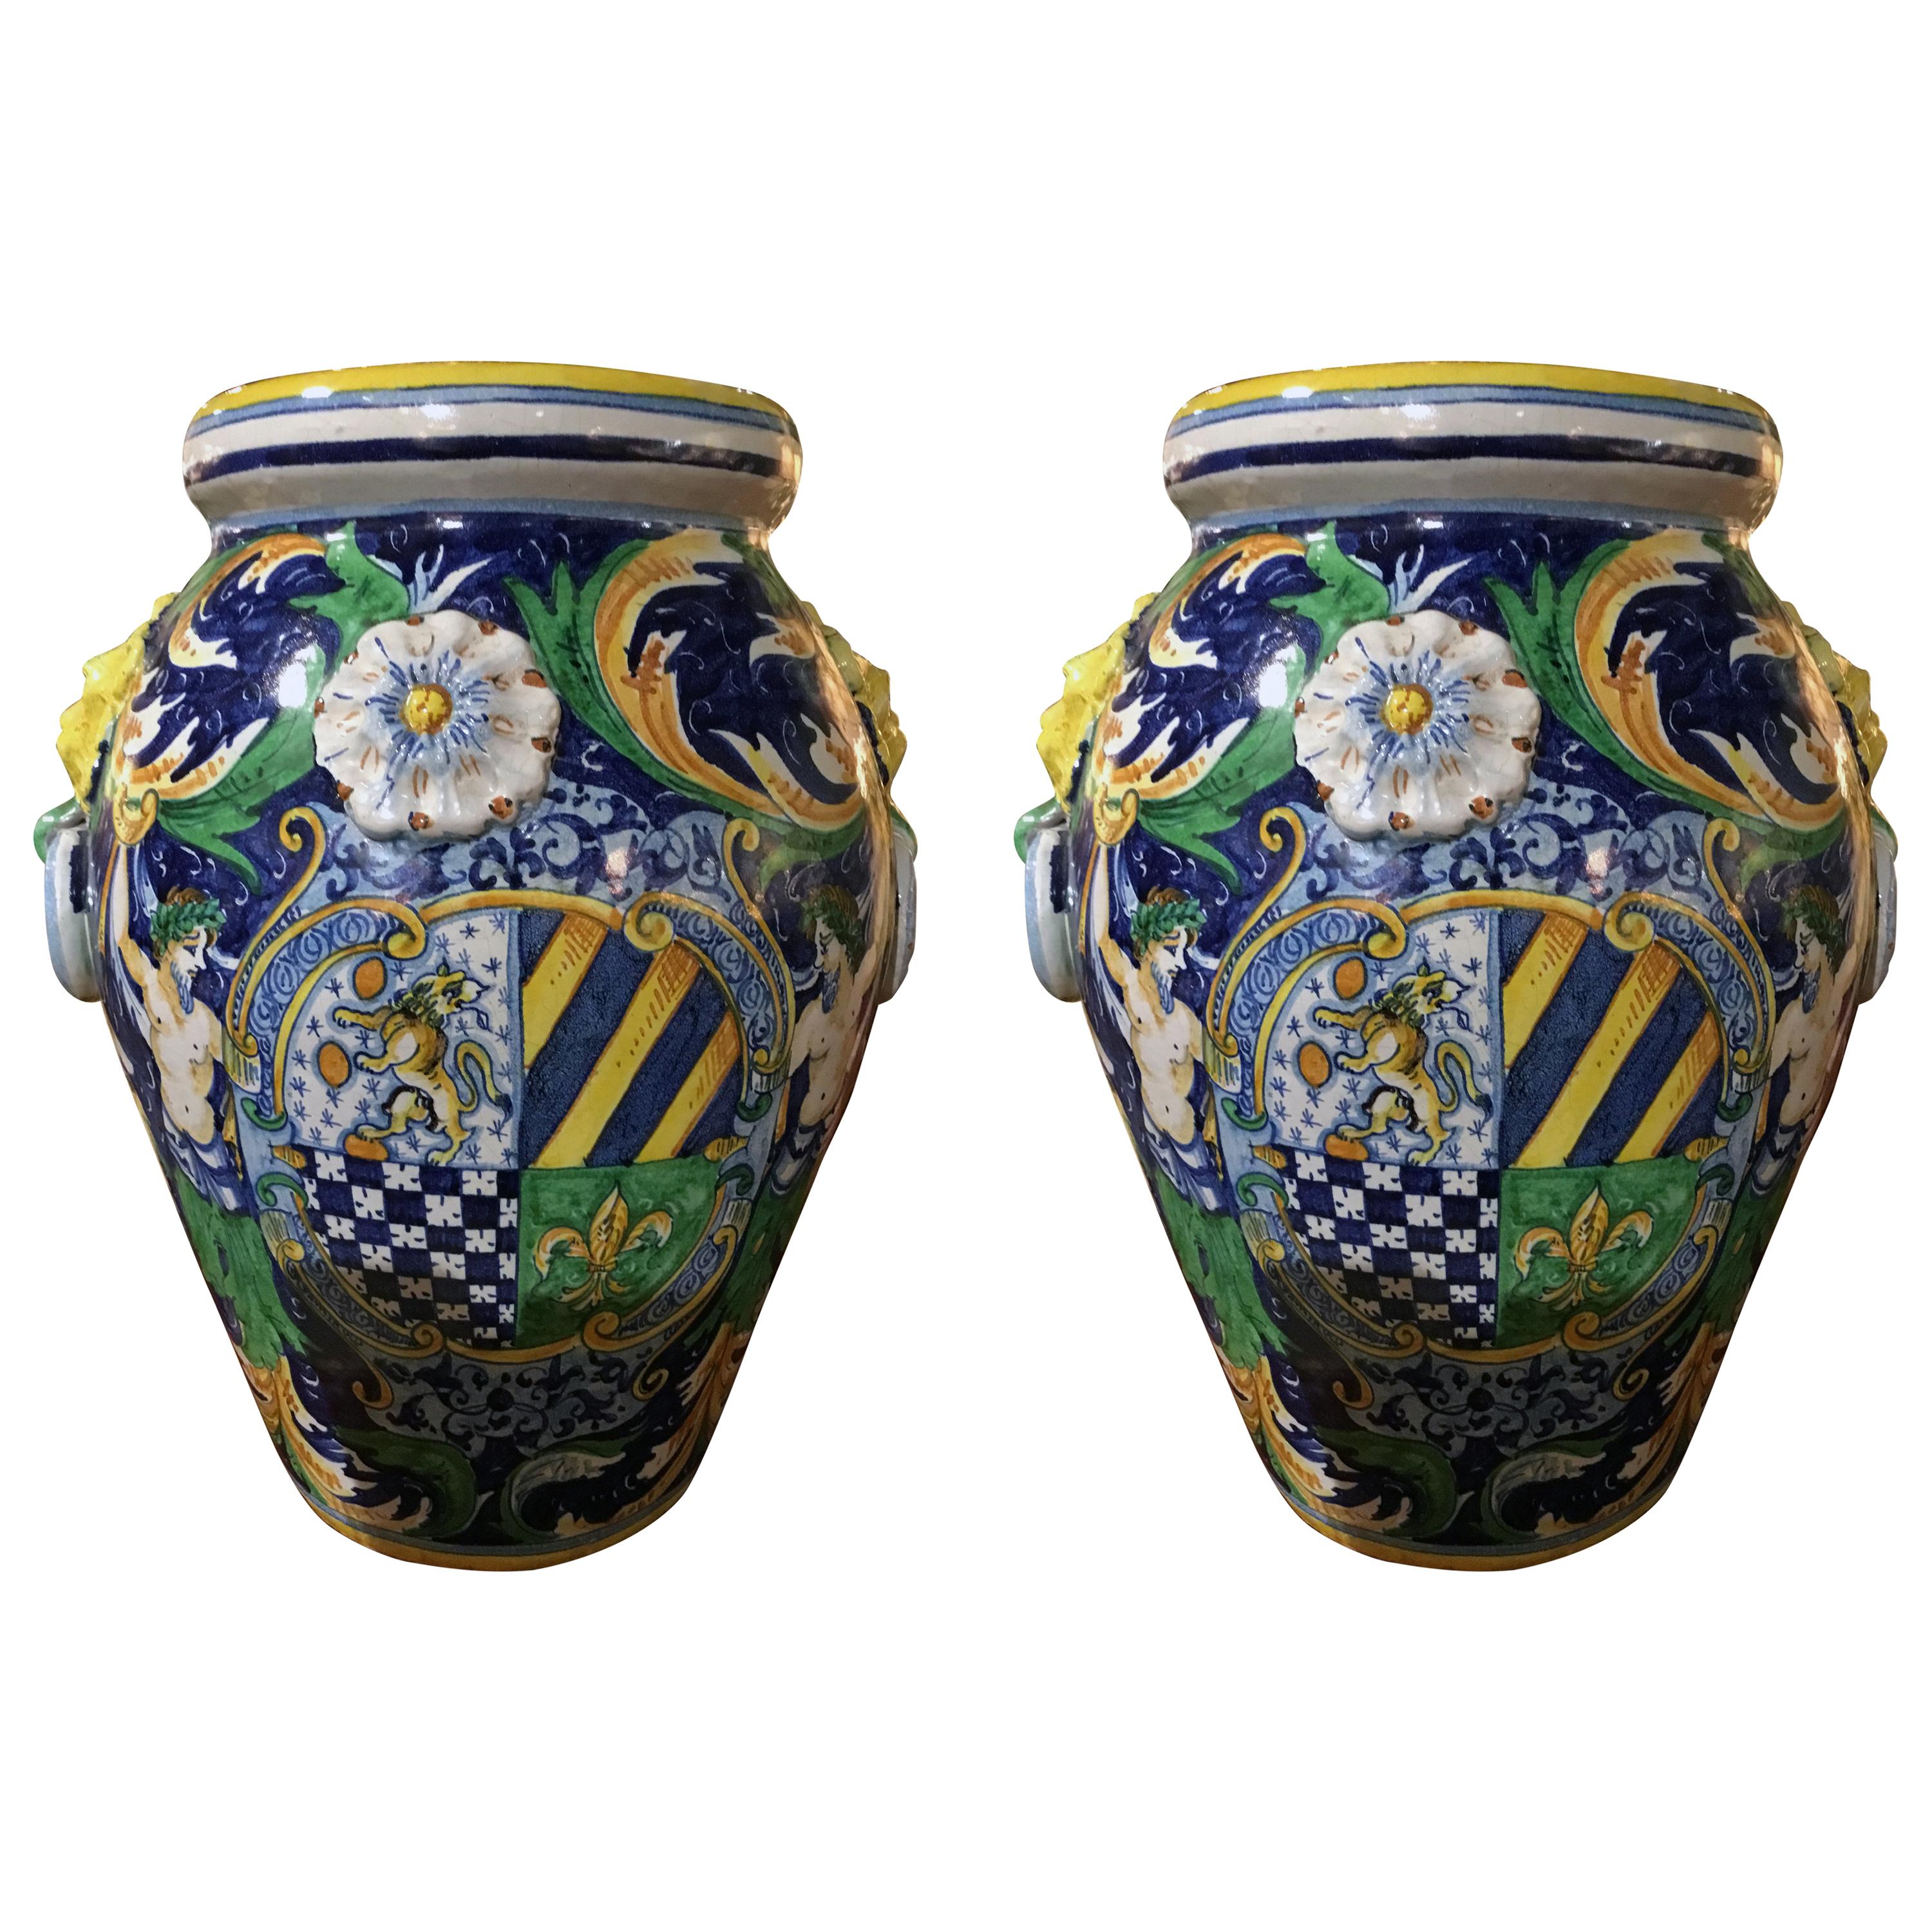 Pair of Large Italian Faience Urns/Vases, Renaissance Style, 19th Century